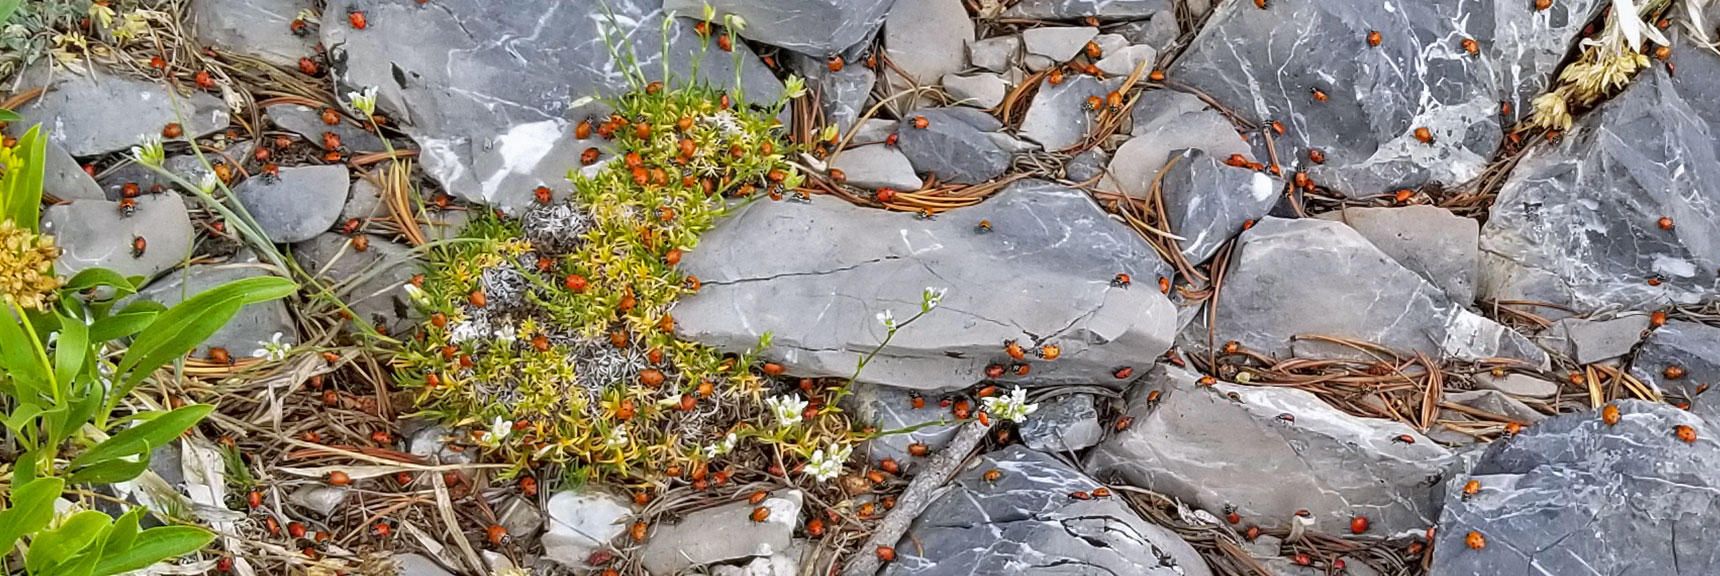 Ladybug Swarm on Harris Mountain Summit | Six Peak Circuit Adventure in the Spring Mountains, Nevada